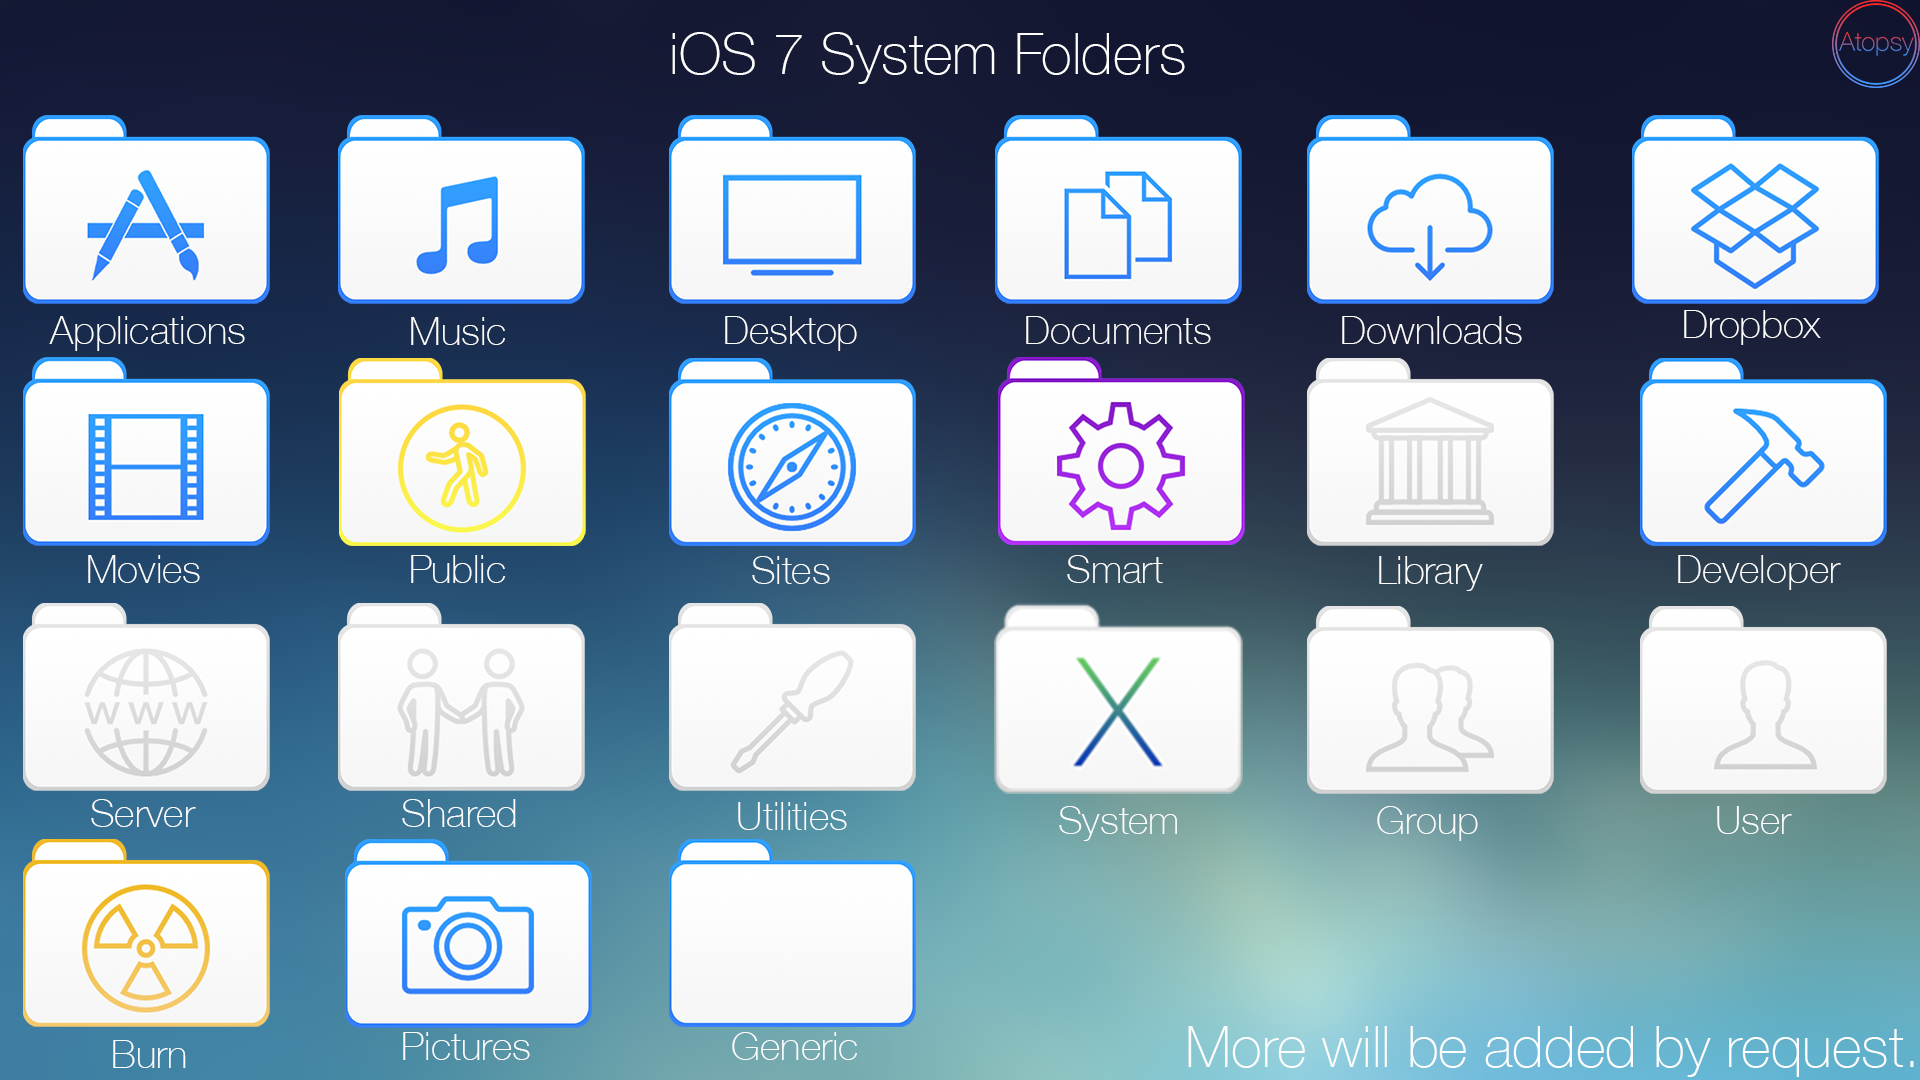 iOS 7 Style System Folders